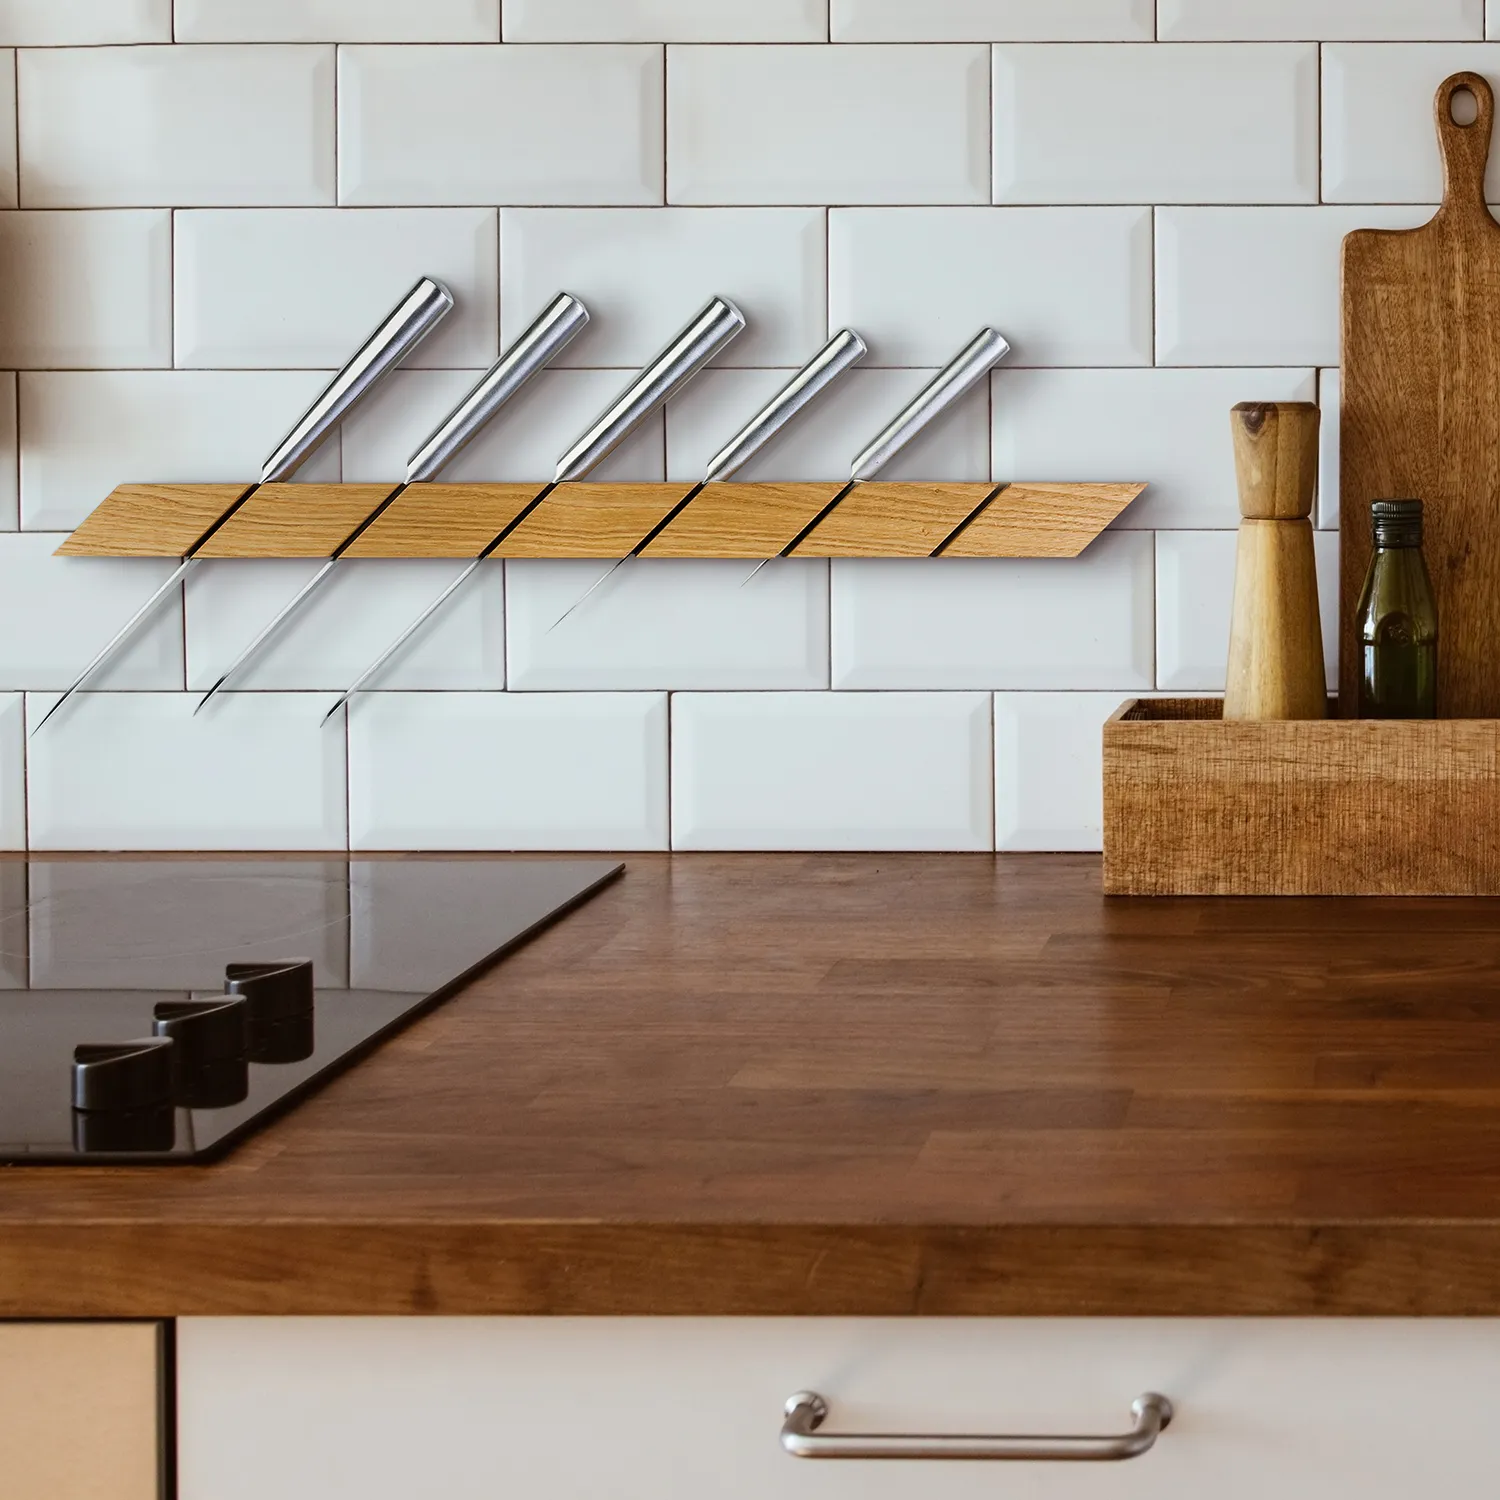 Messerhalter an Wand in Küche